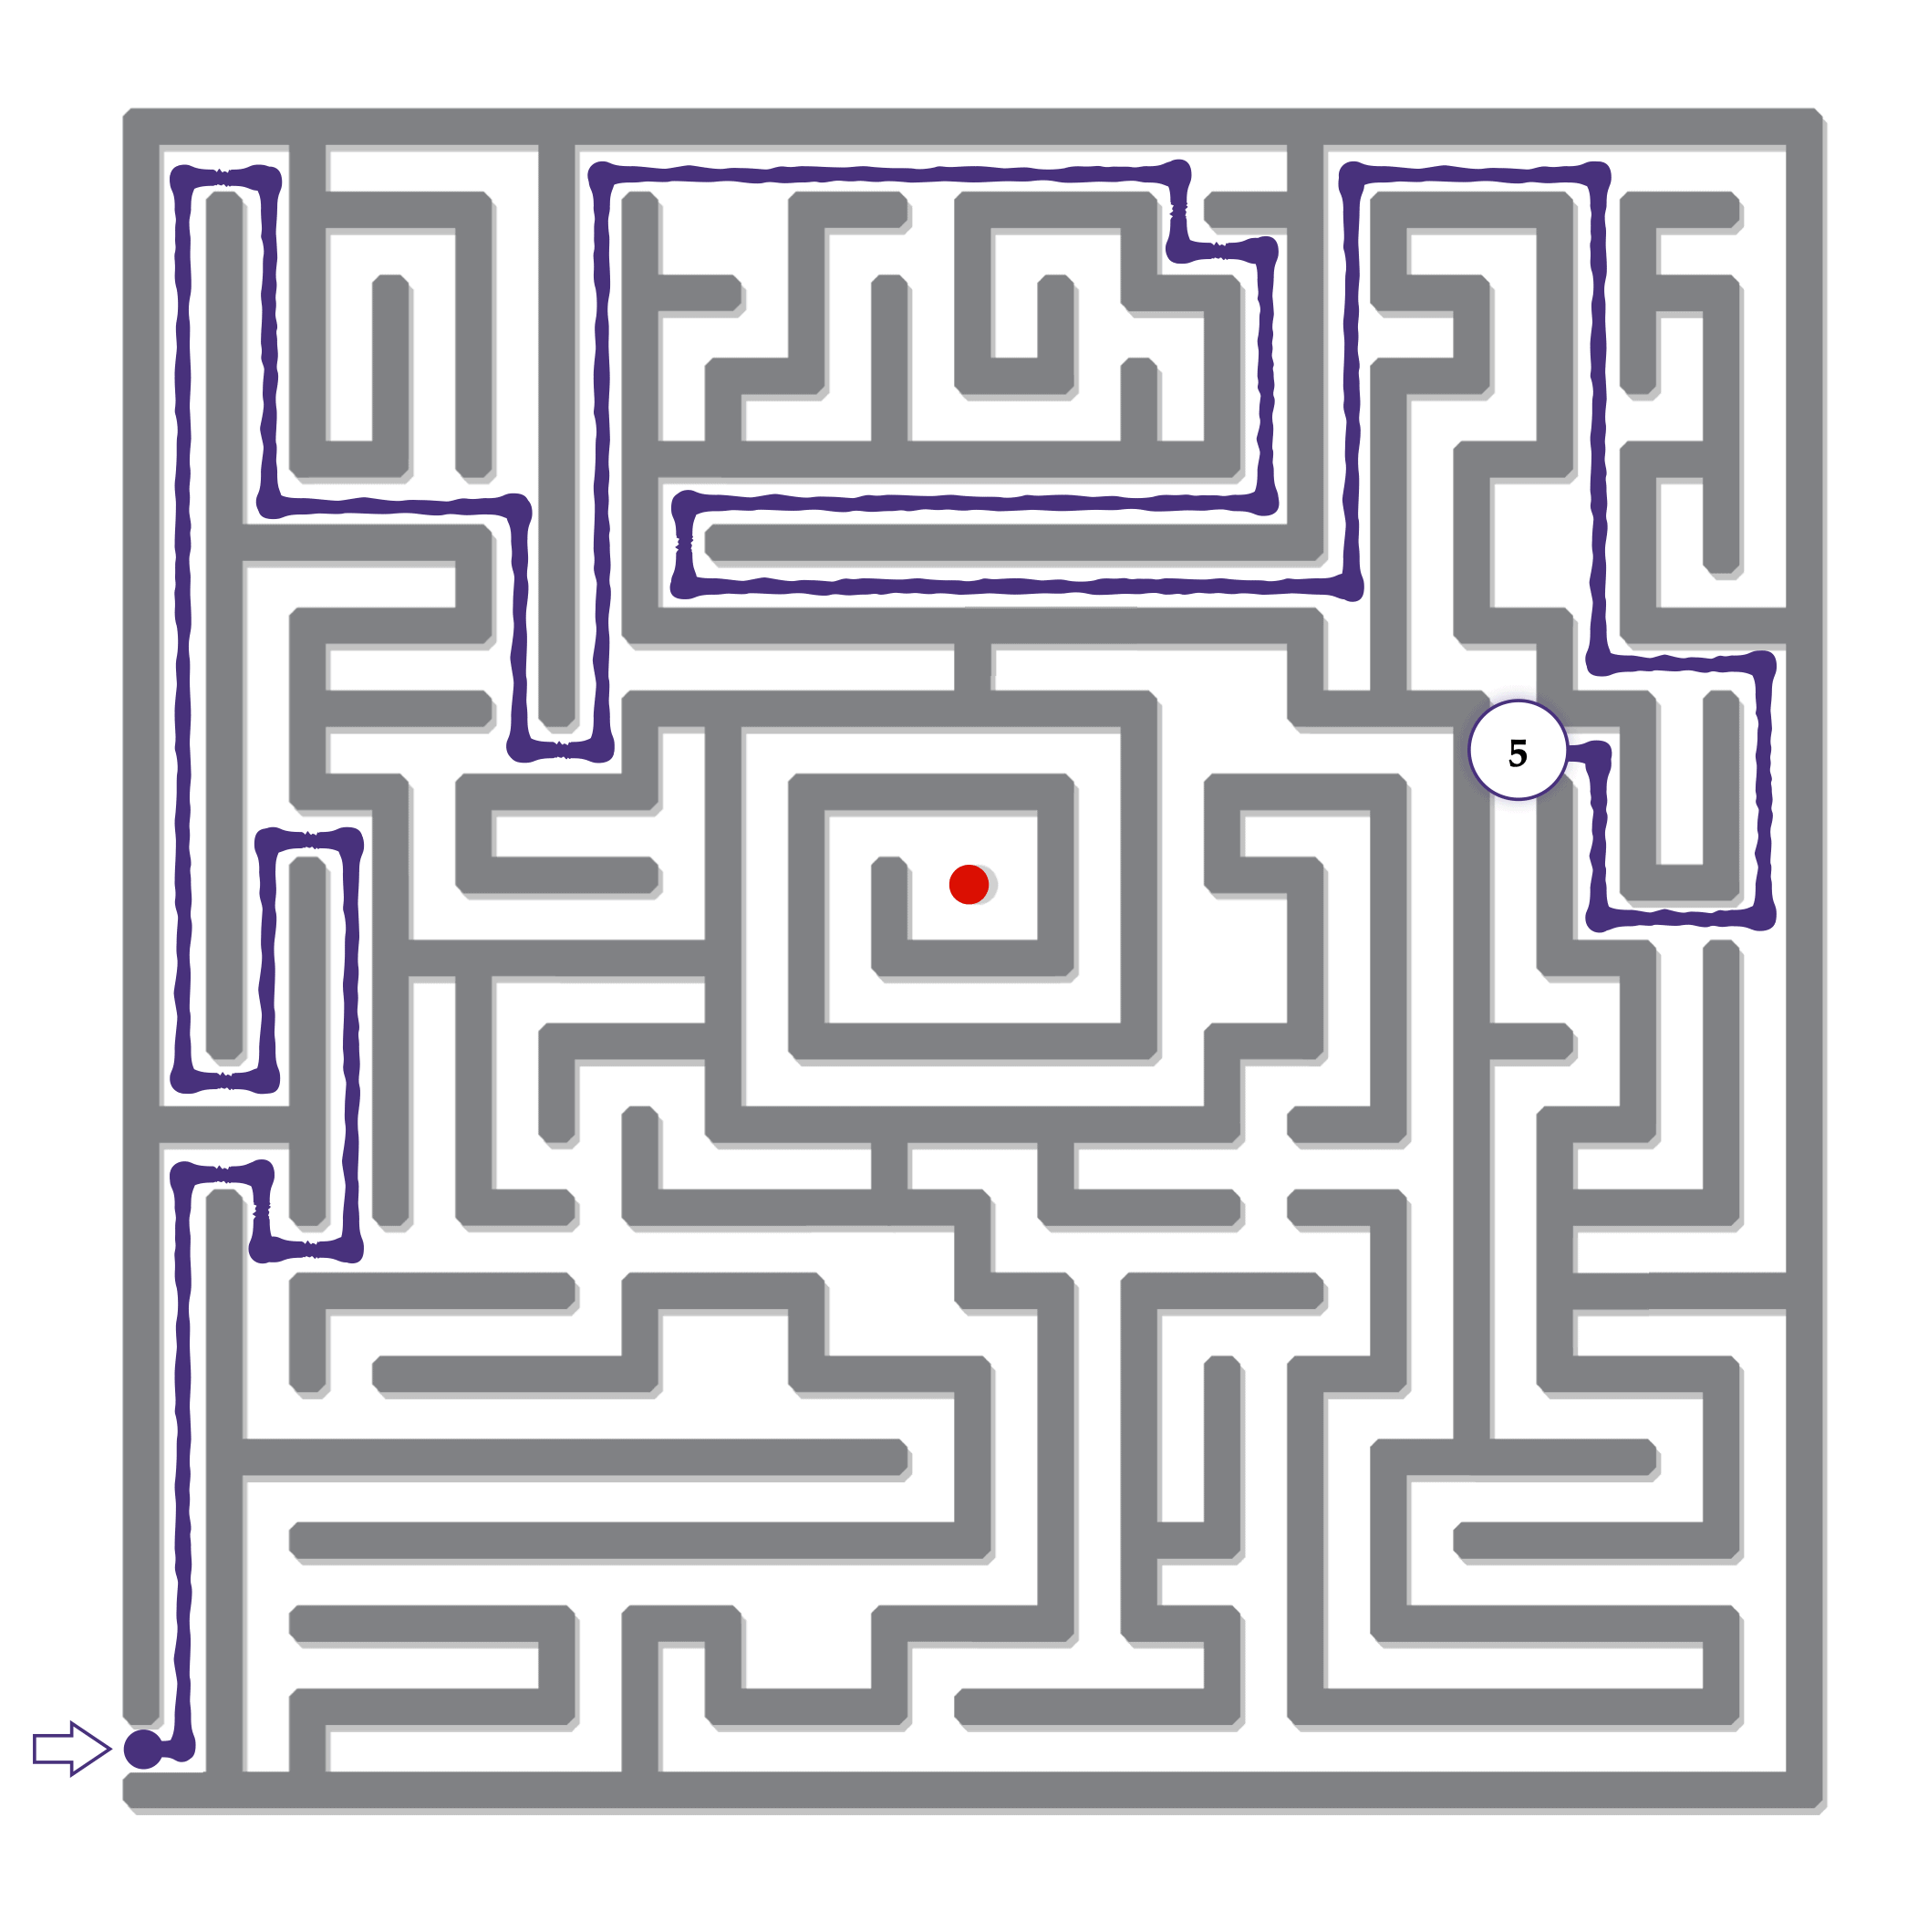 5345220 Maze step 5